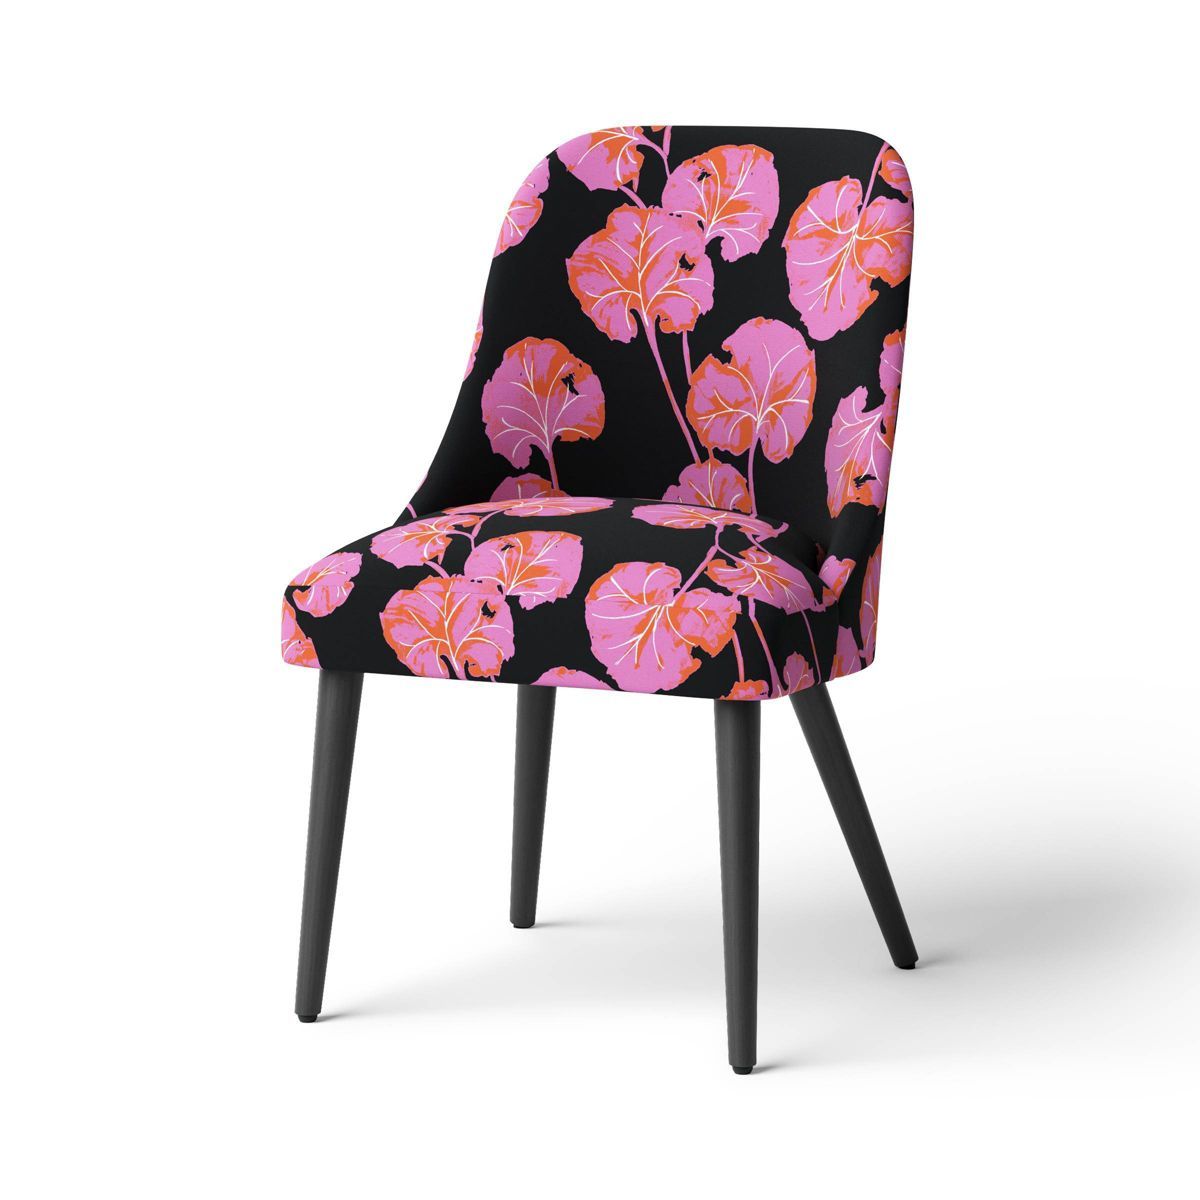 Geranium Leaf Pink/Black Upholstered Task and Office Chair - DVF for Target | Target